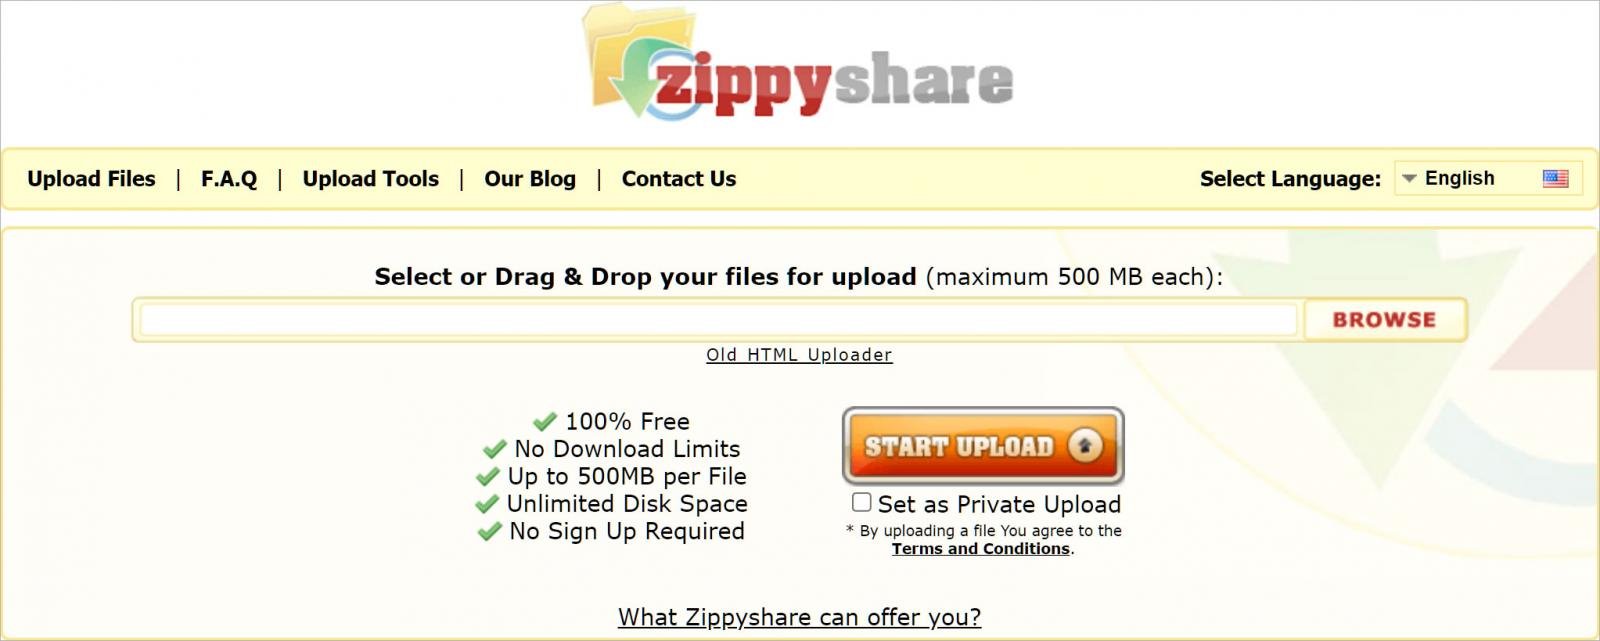 The Zippyshare site